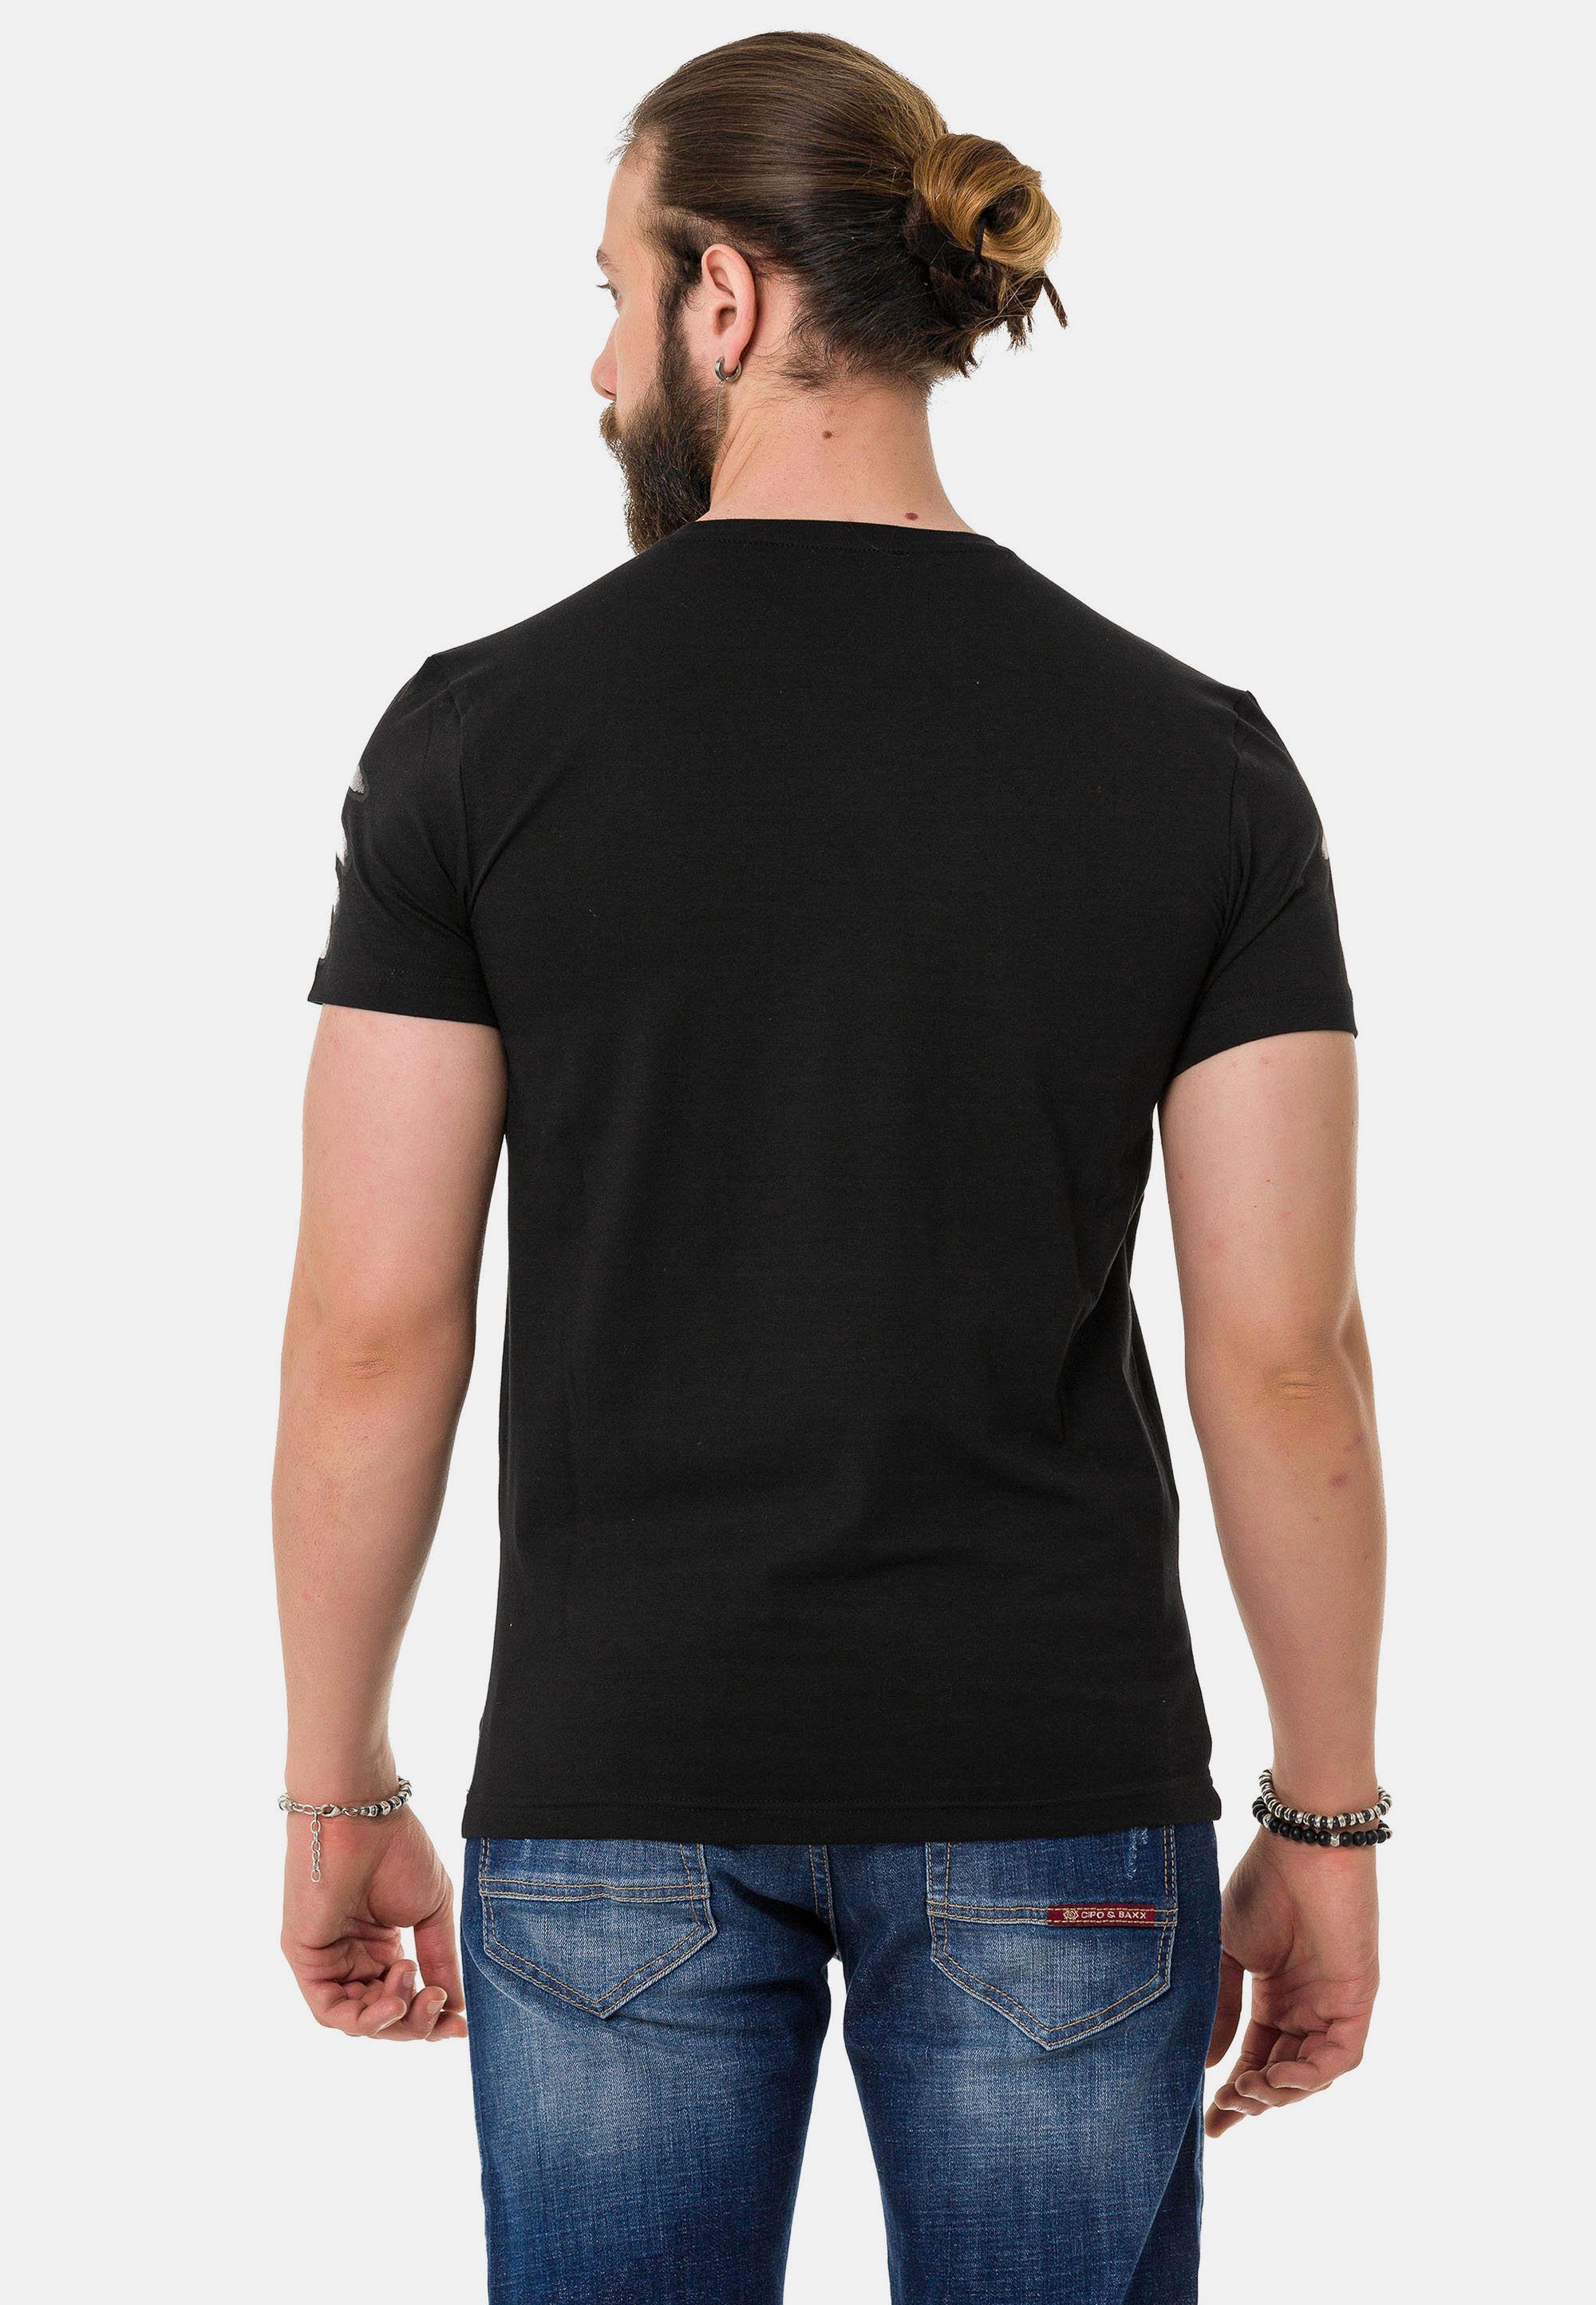 Cipo Look schwarz in T-Shirt rockigem & Baxx